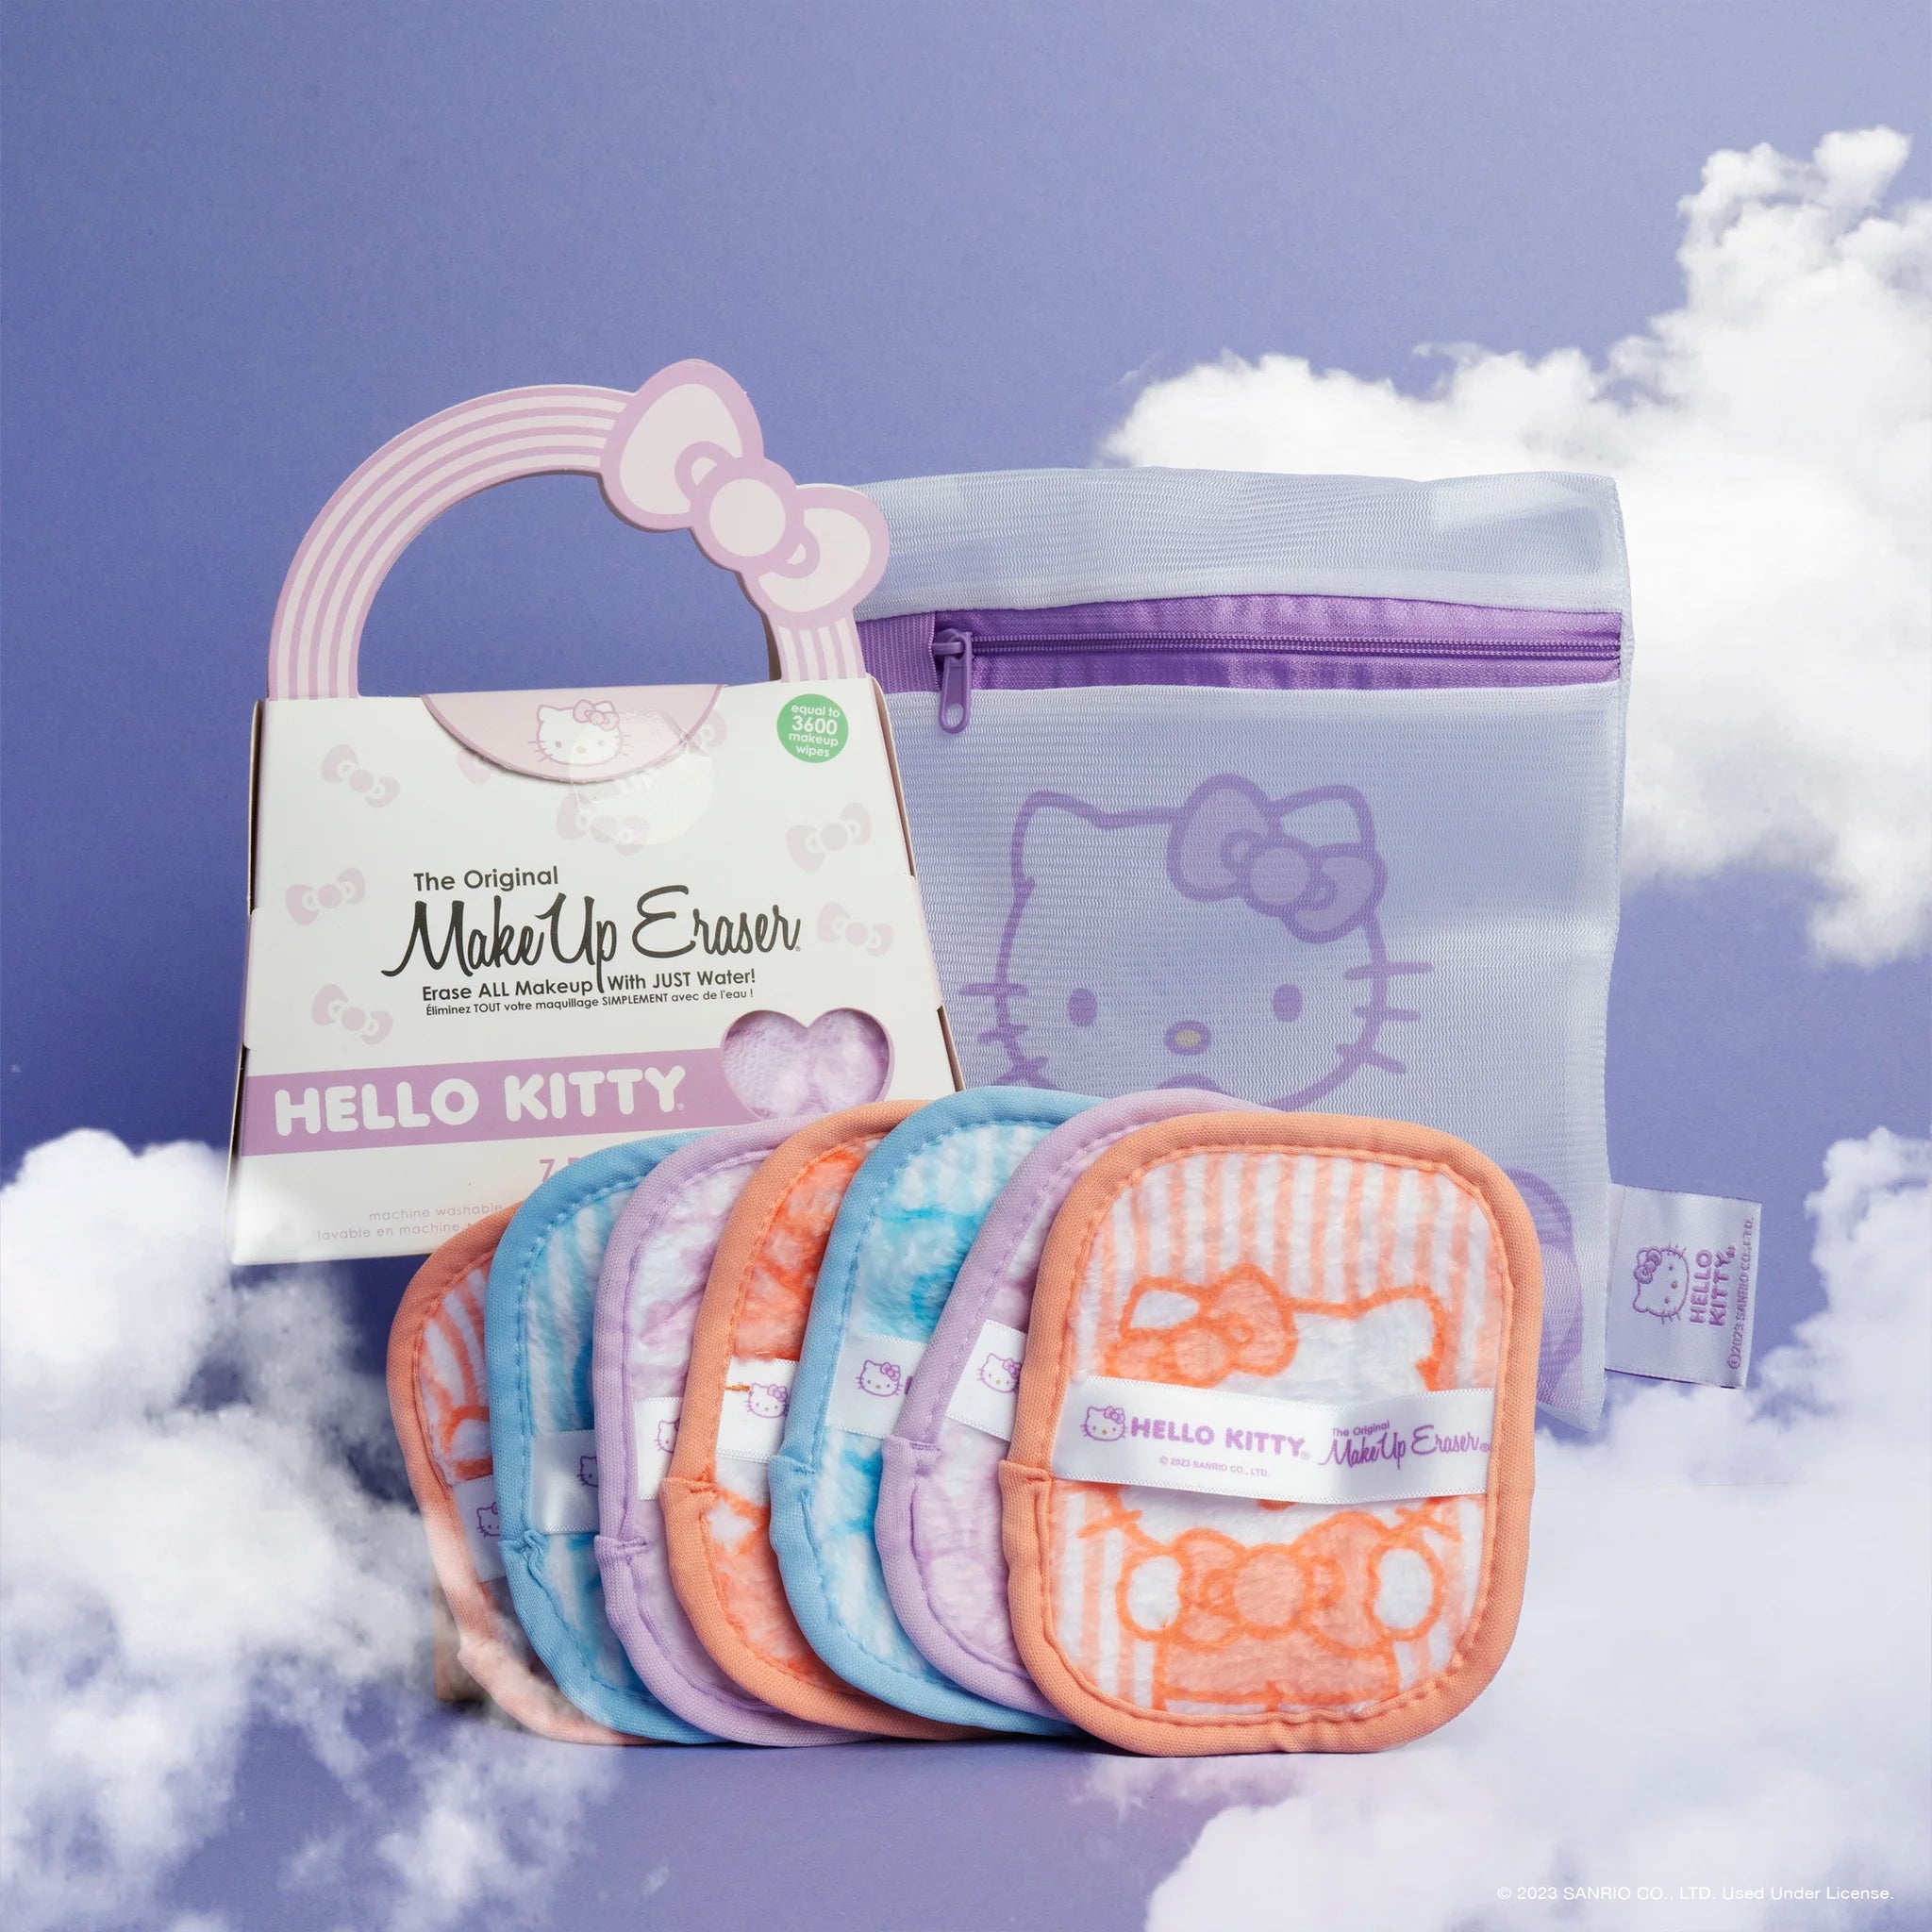 MakeUp Eraser - Hello Kitty 7-Day Set